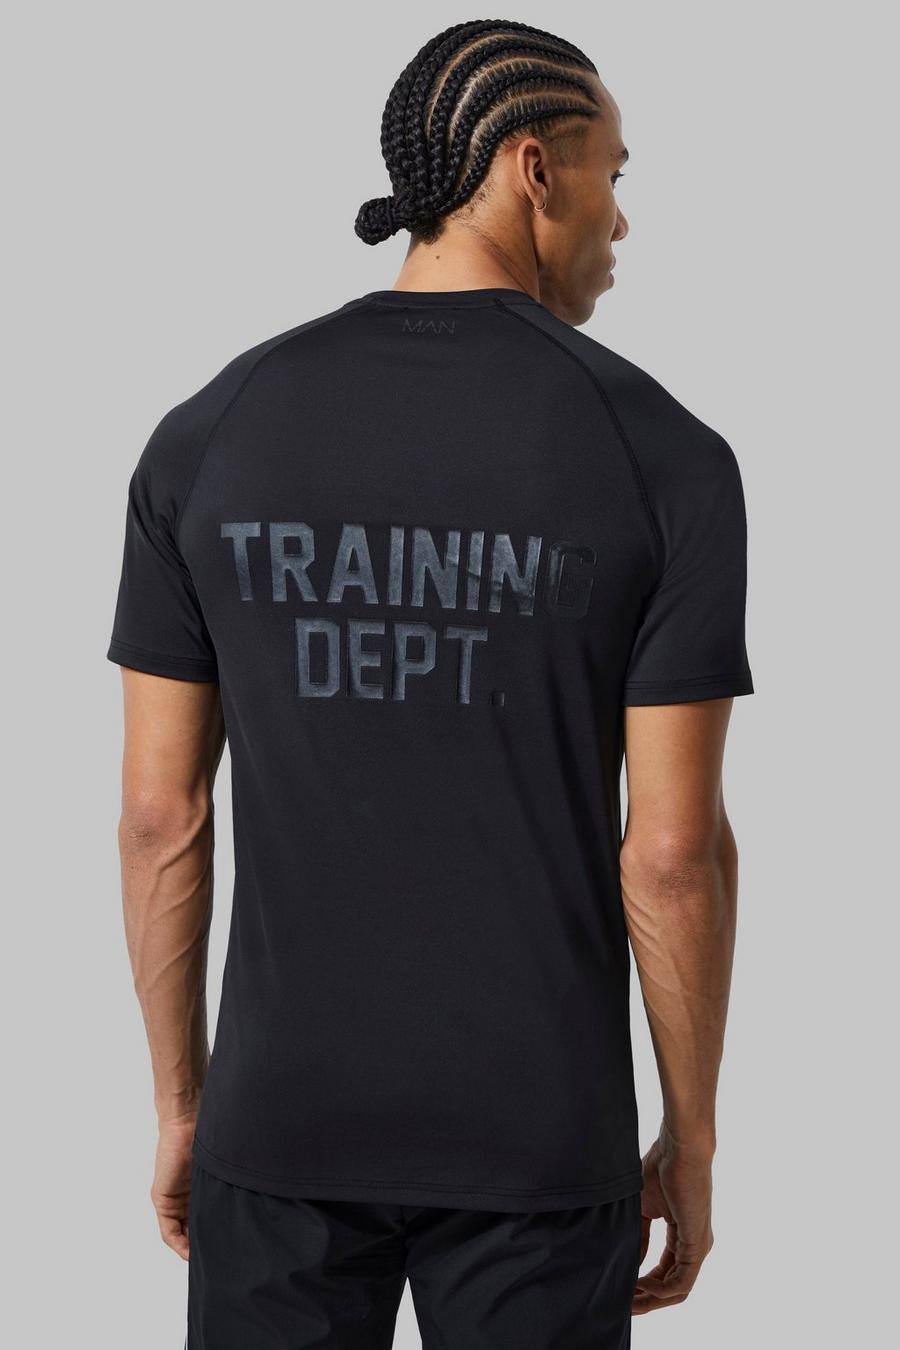 Black noir Tall Man Active Training Dept Muscle Fit T-shirt